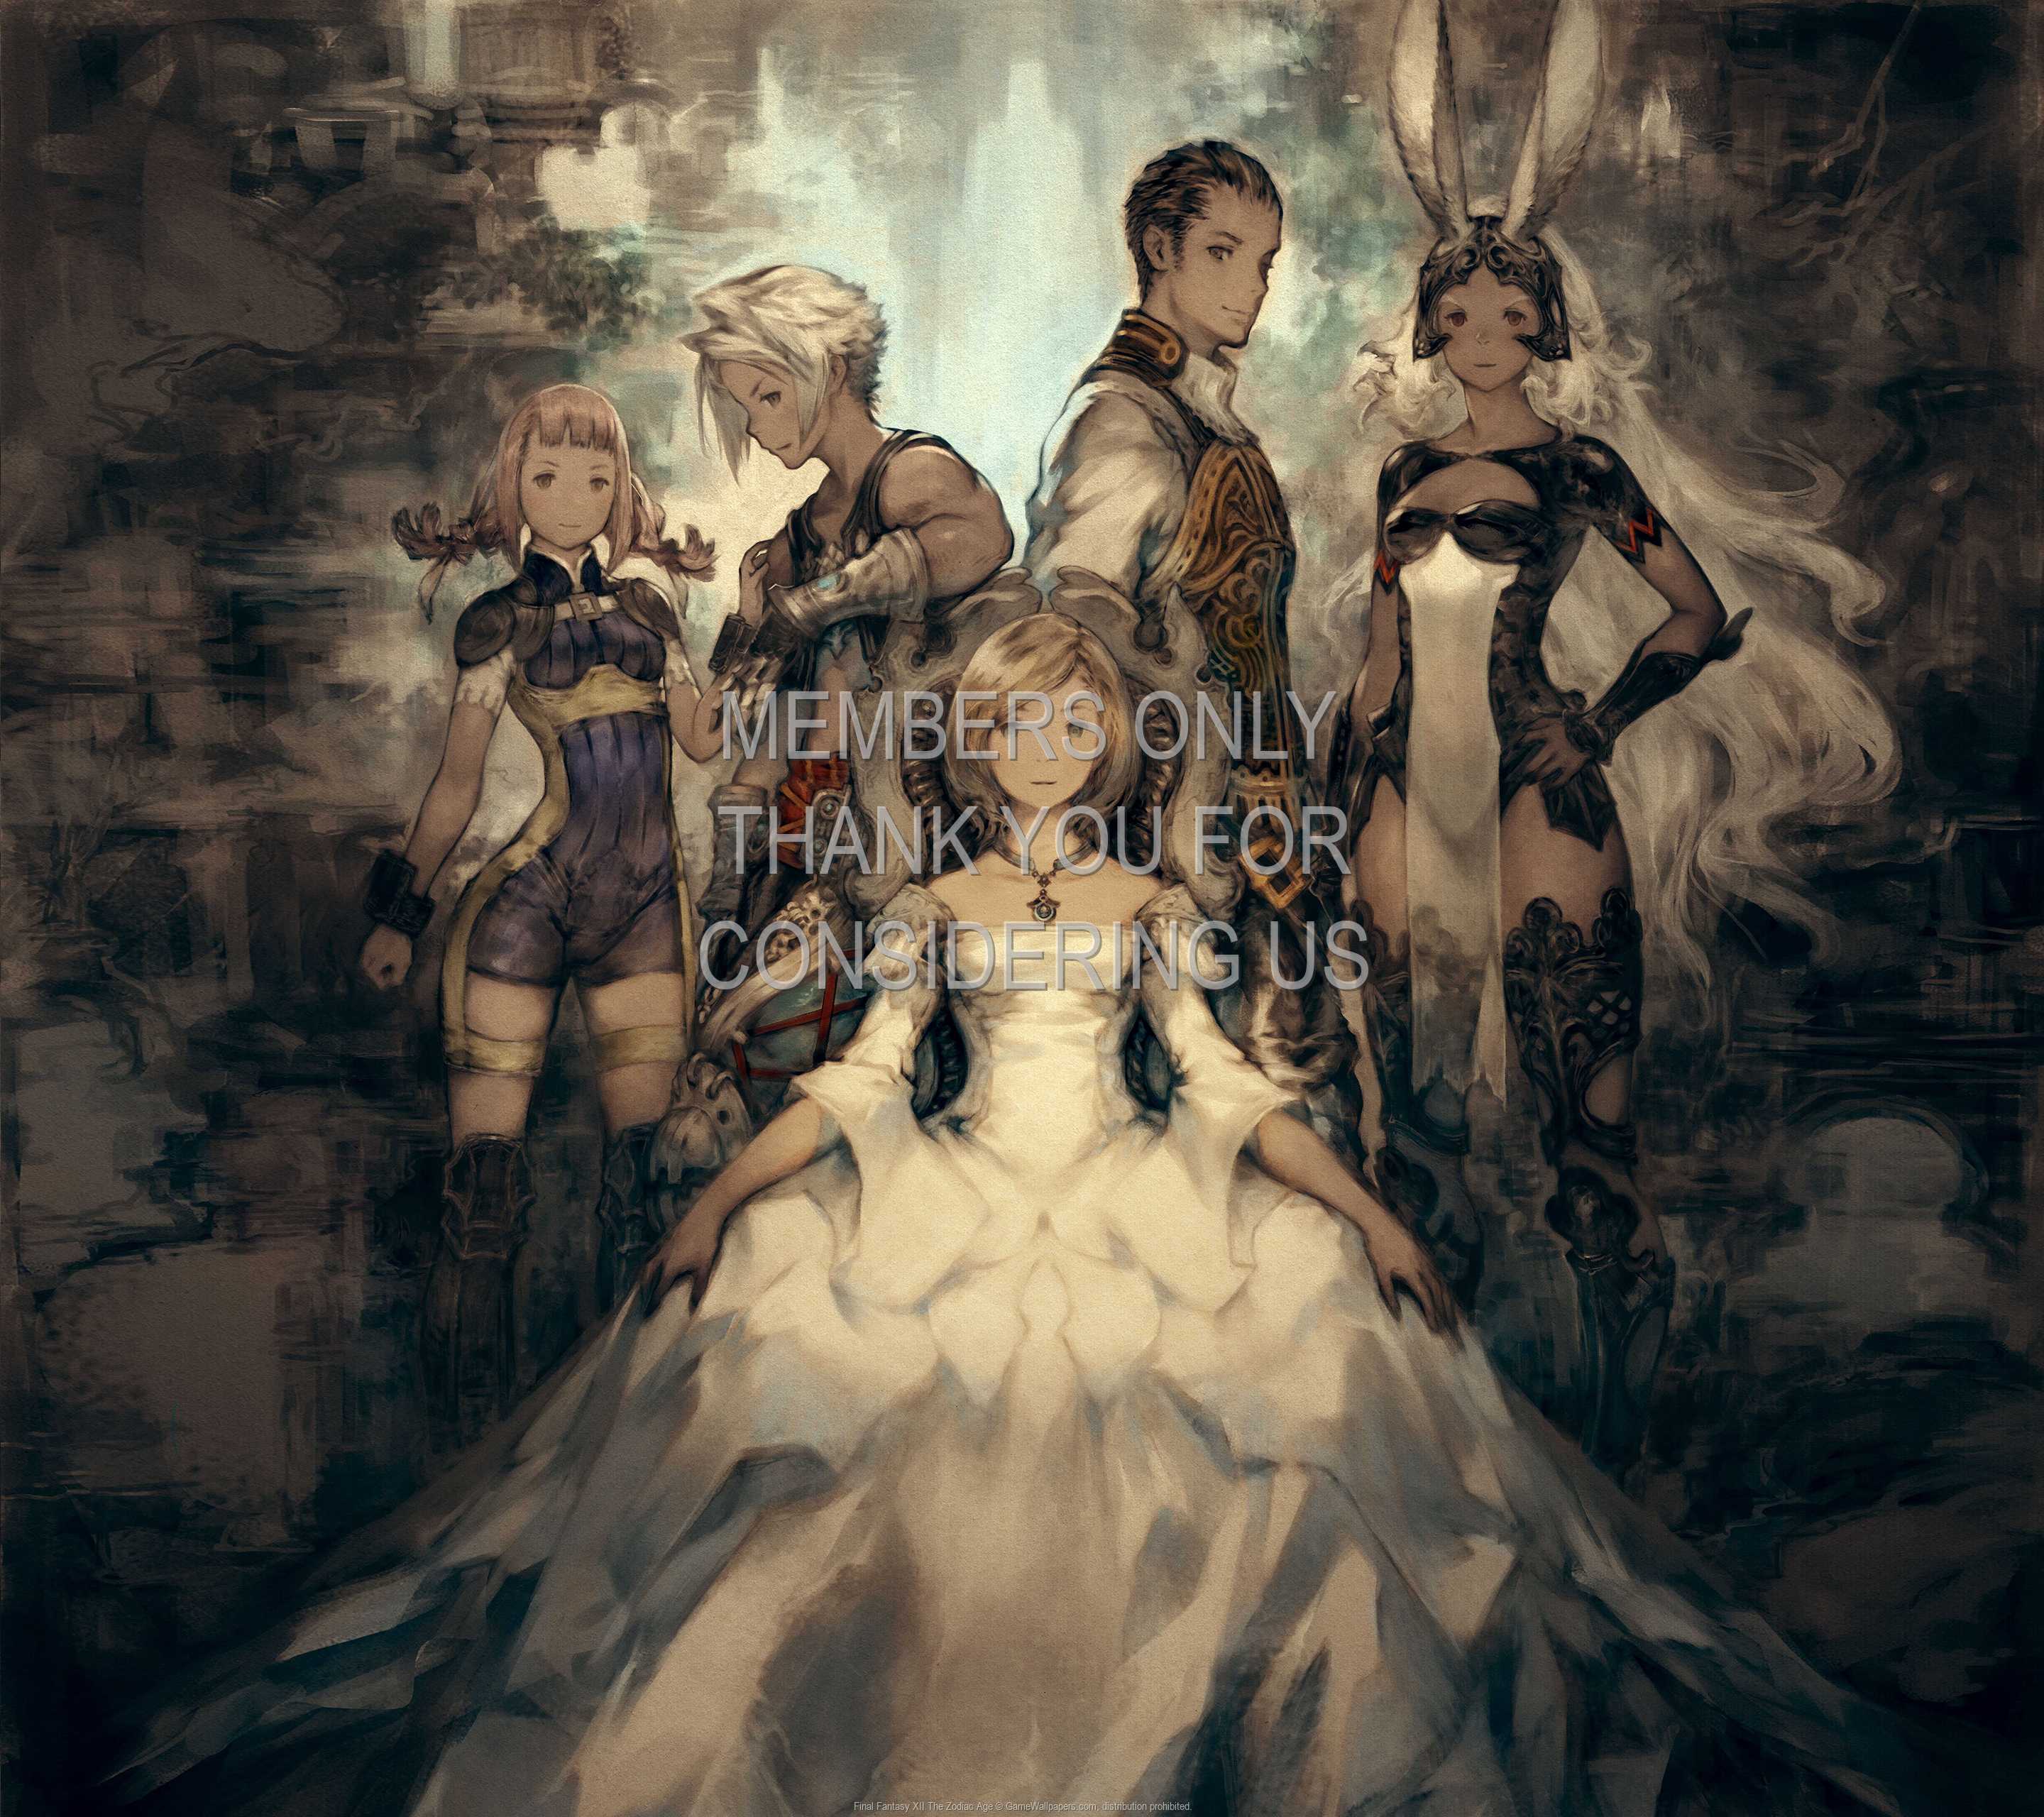 Final Fantasy XII The Zodiac Age 1440p Horizontal Mobile wallpaper or background 01